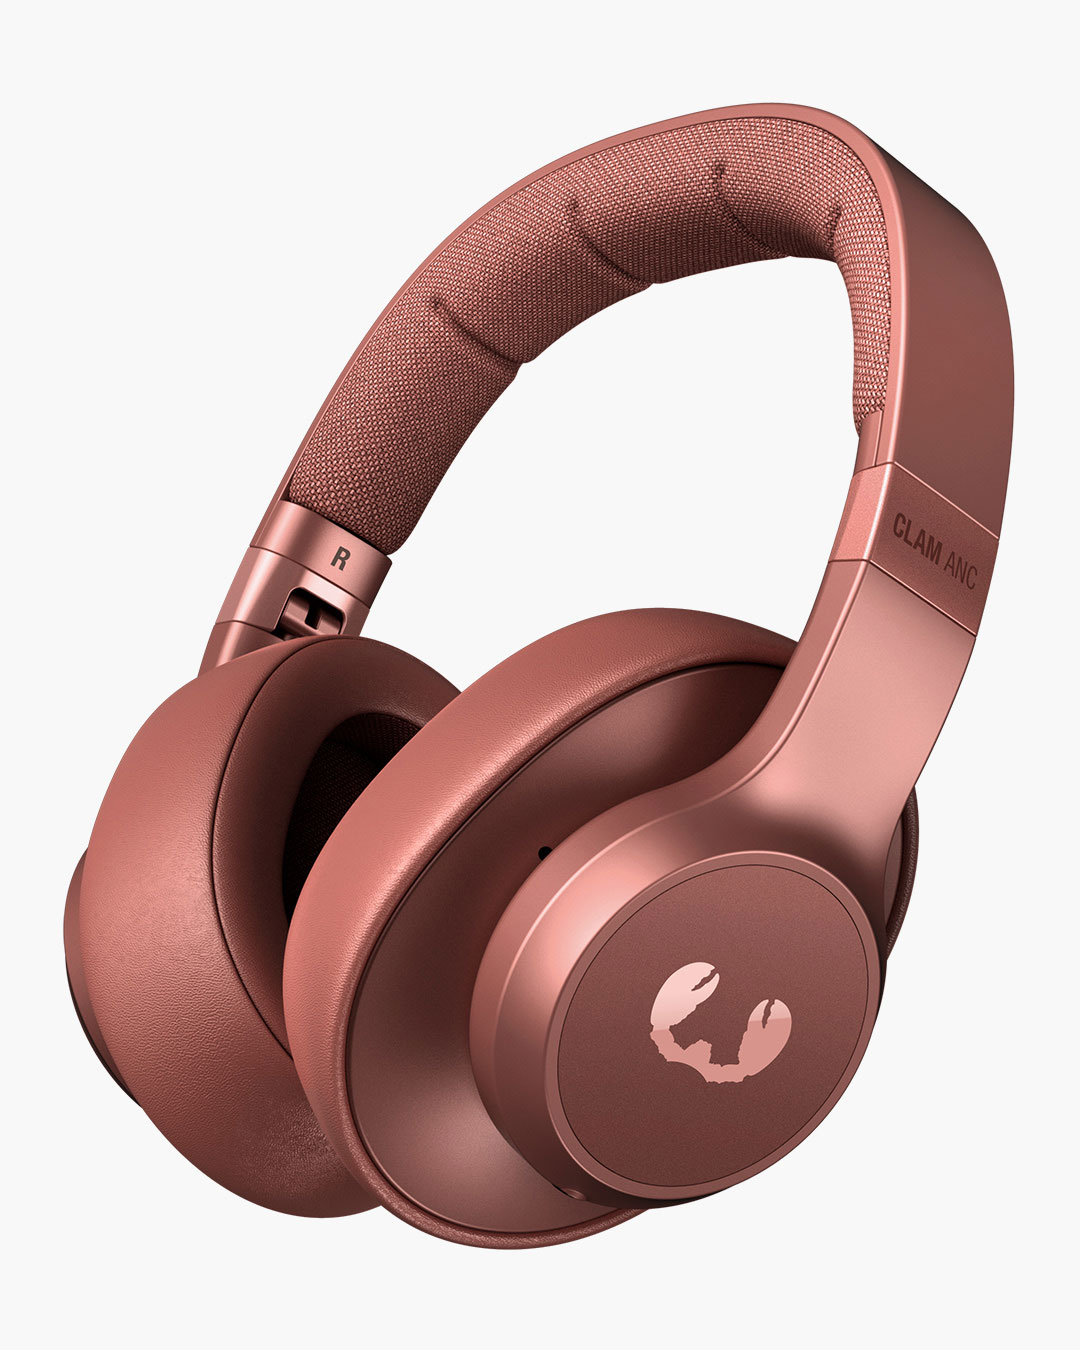 Fresh ’n Rebel Clam Kopfhörer Ruby Red Over-ear Bluetooth Kopfhörer 